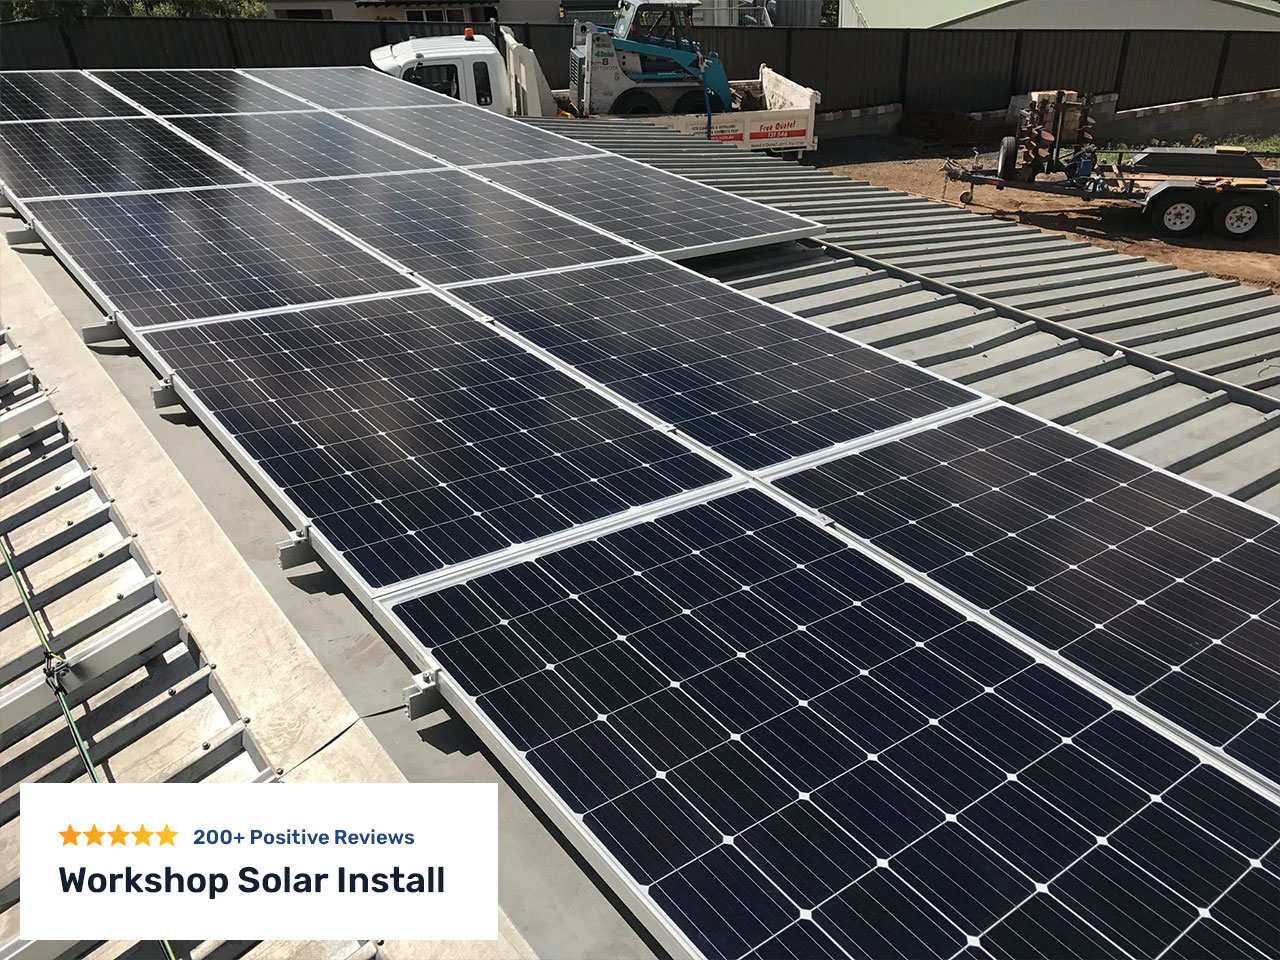 Solareze residential workshop solar install